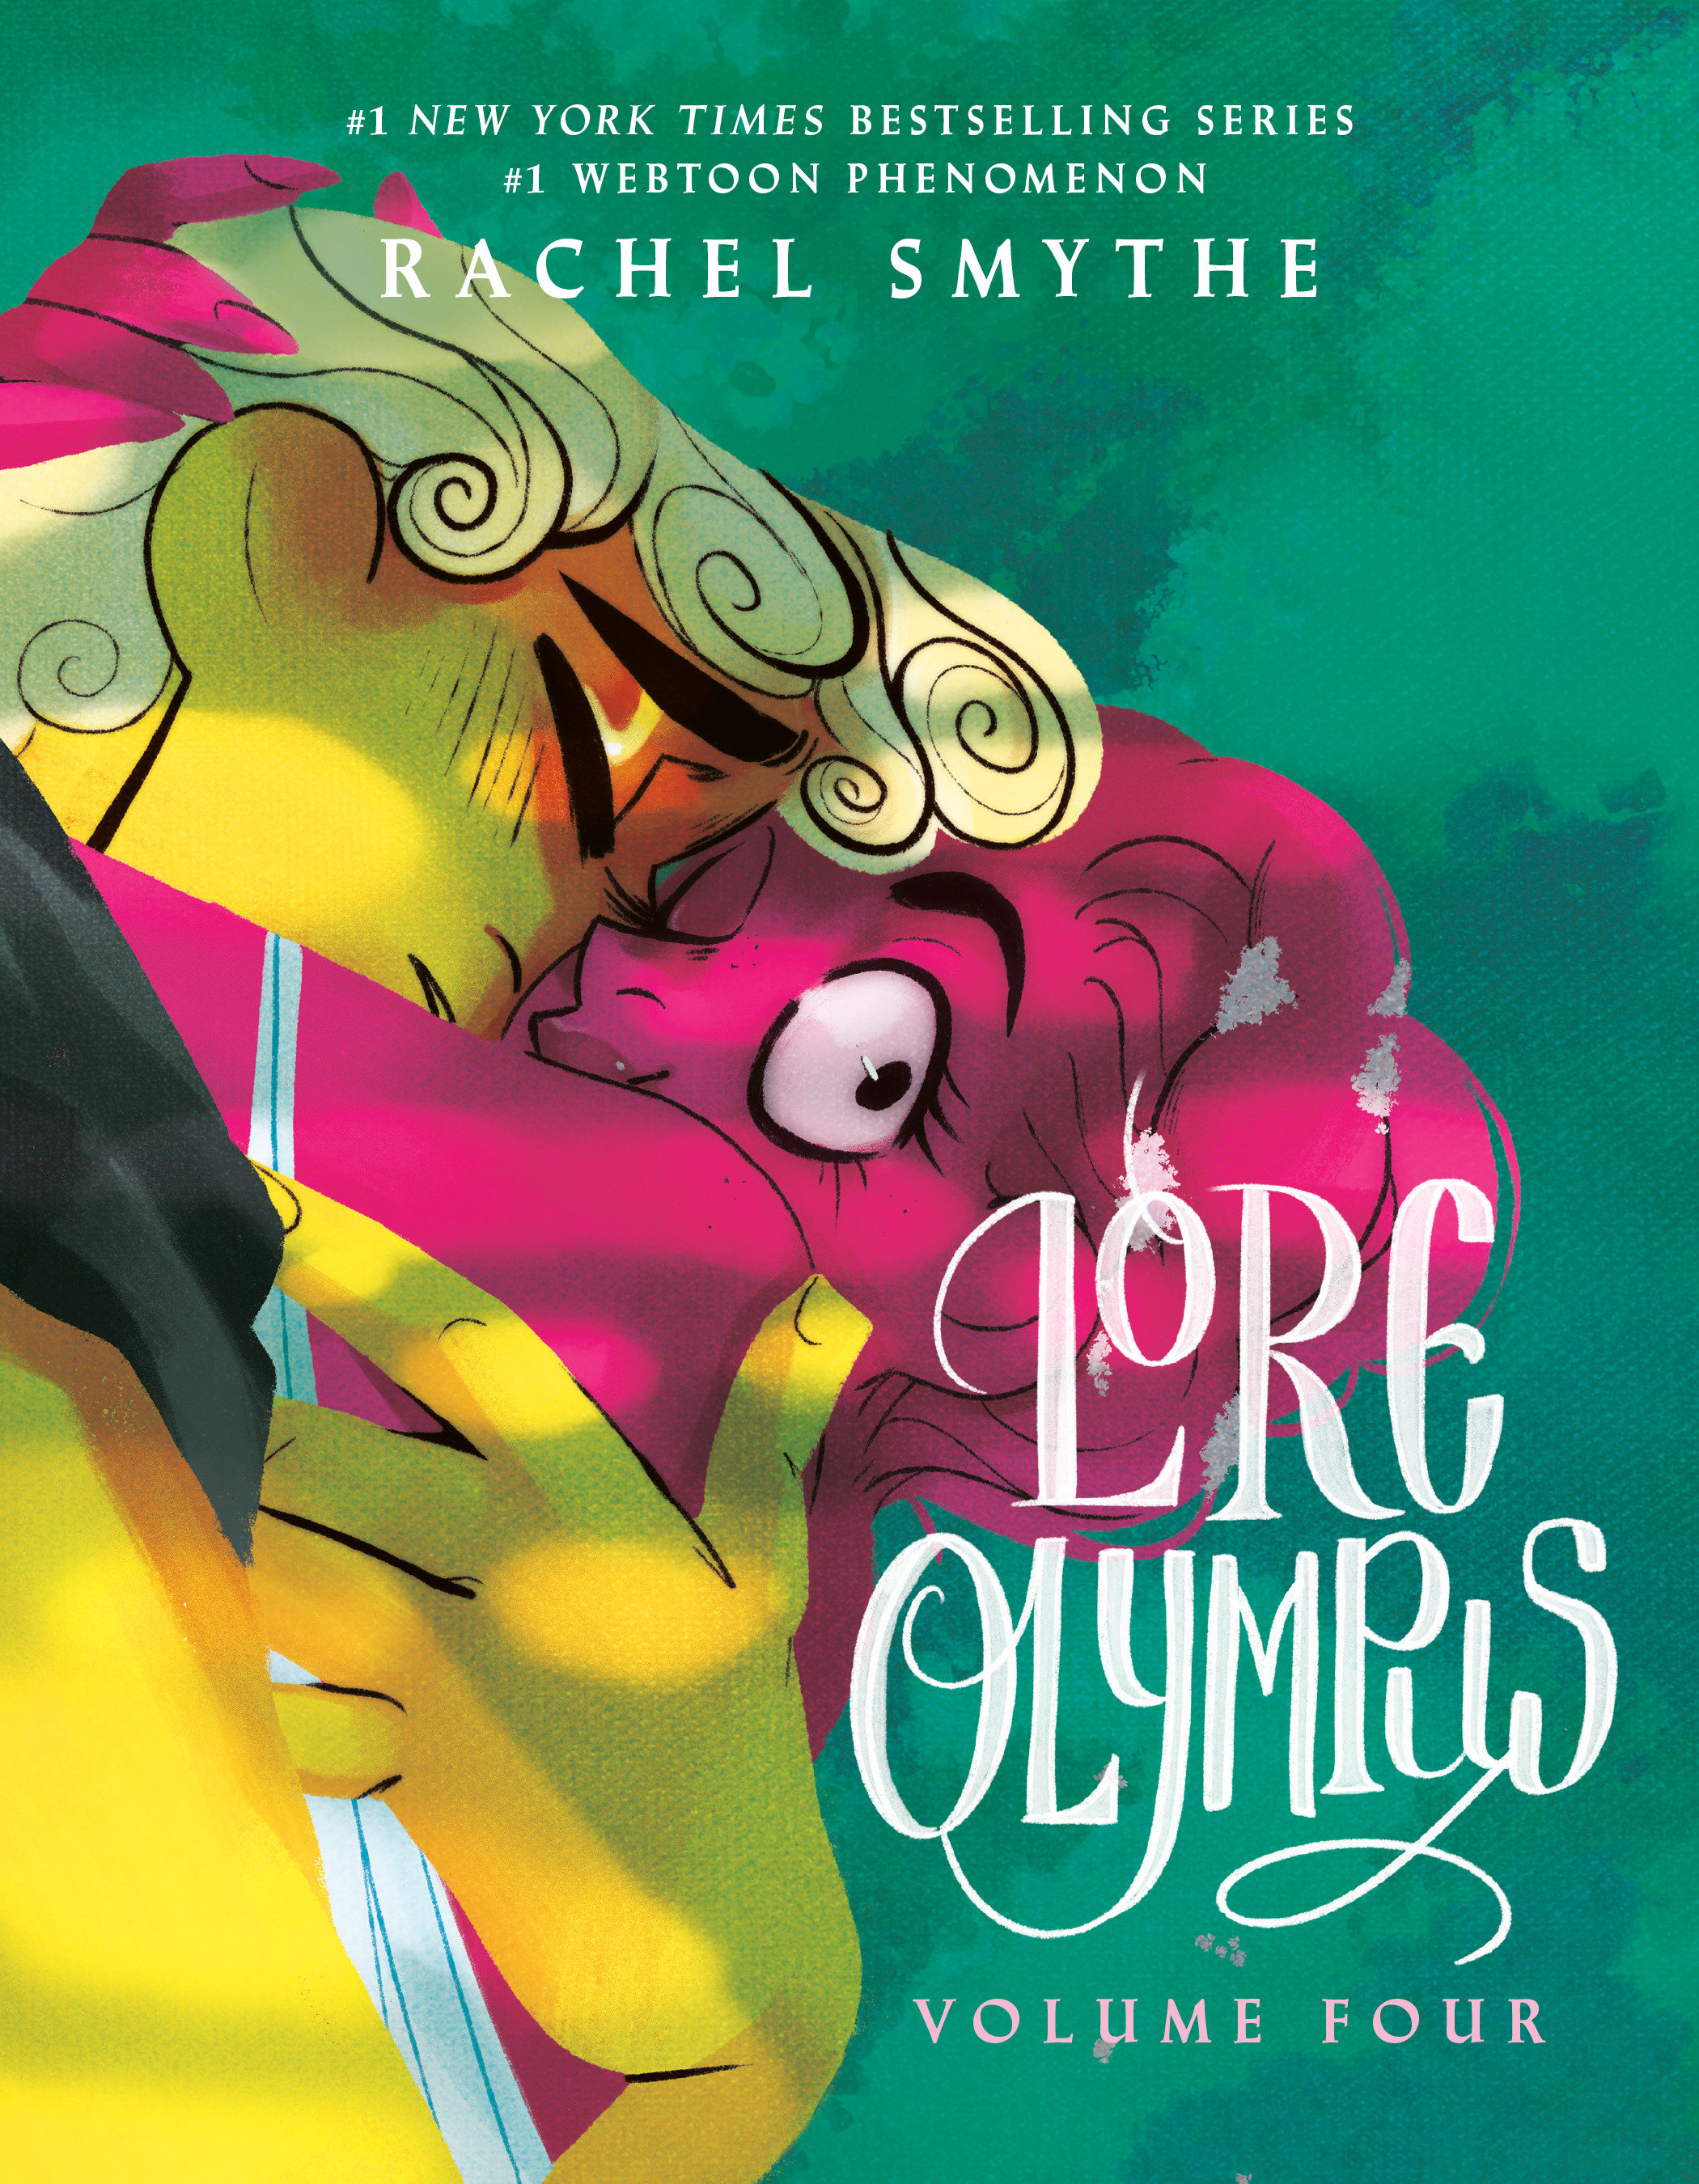 Lore Olympus Hardcover Graphic Novel Volume 4